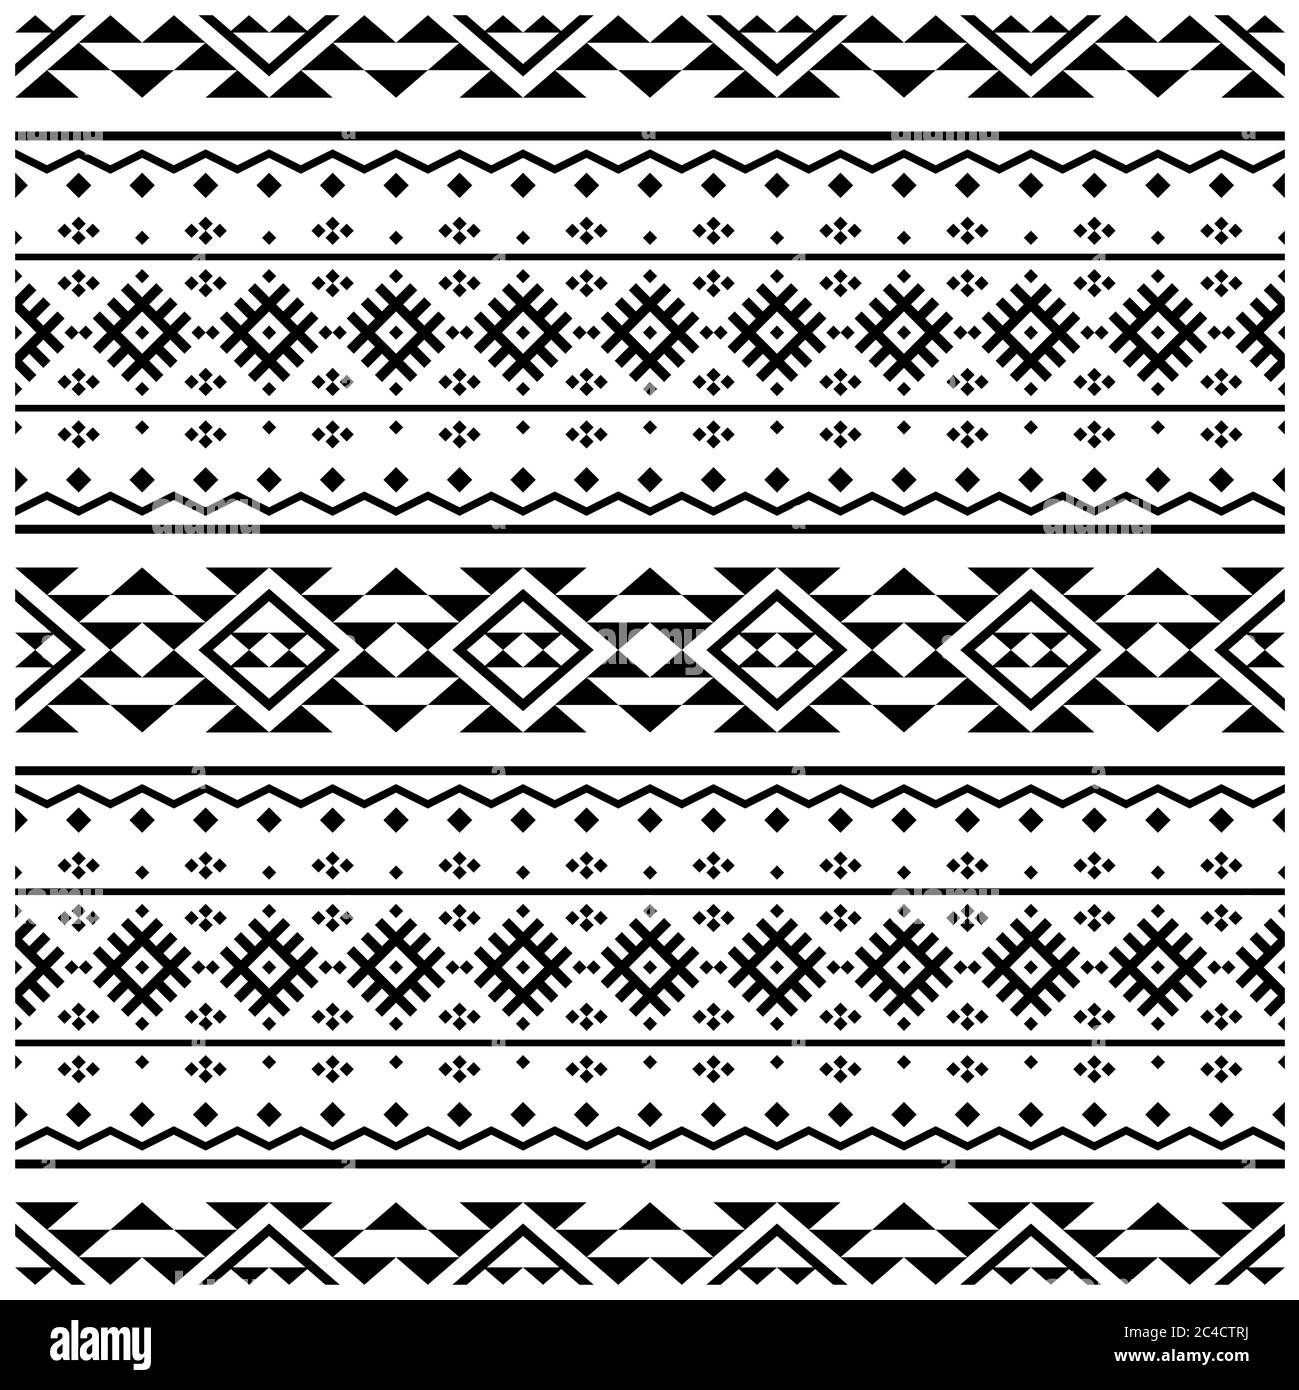 Seamless ethnic pattern textile design images-illustration in black ...